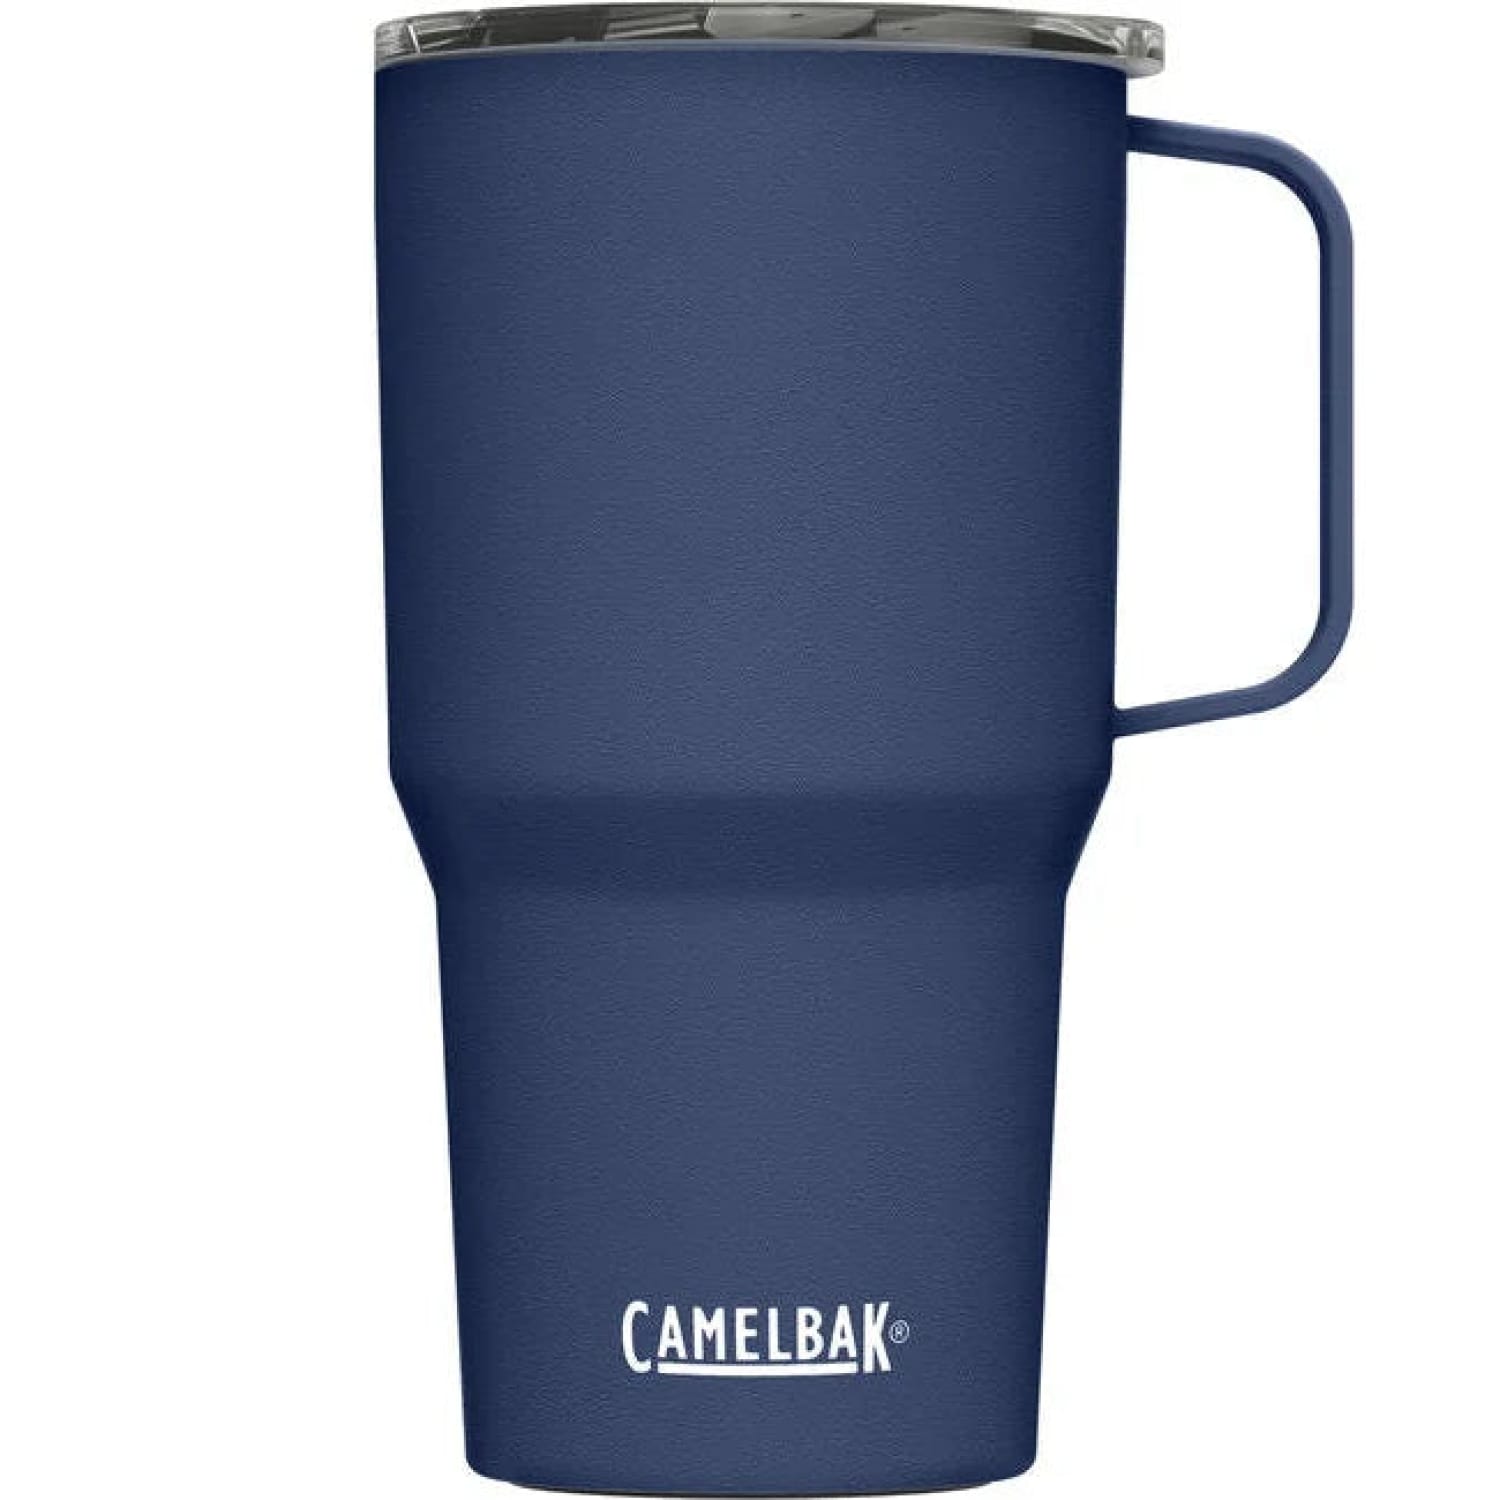  CamelBak Forge Flow Coffee & Travel Mug, Insulated